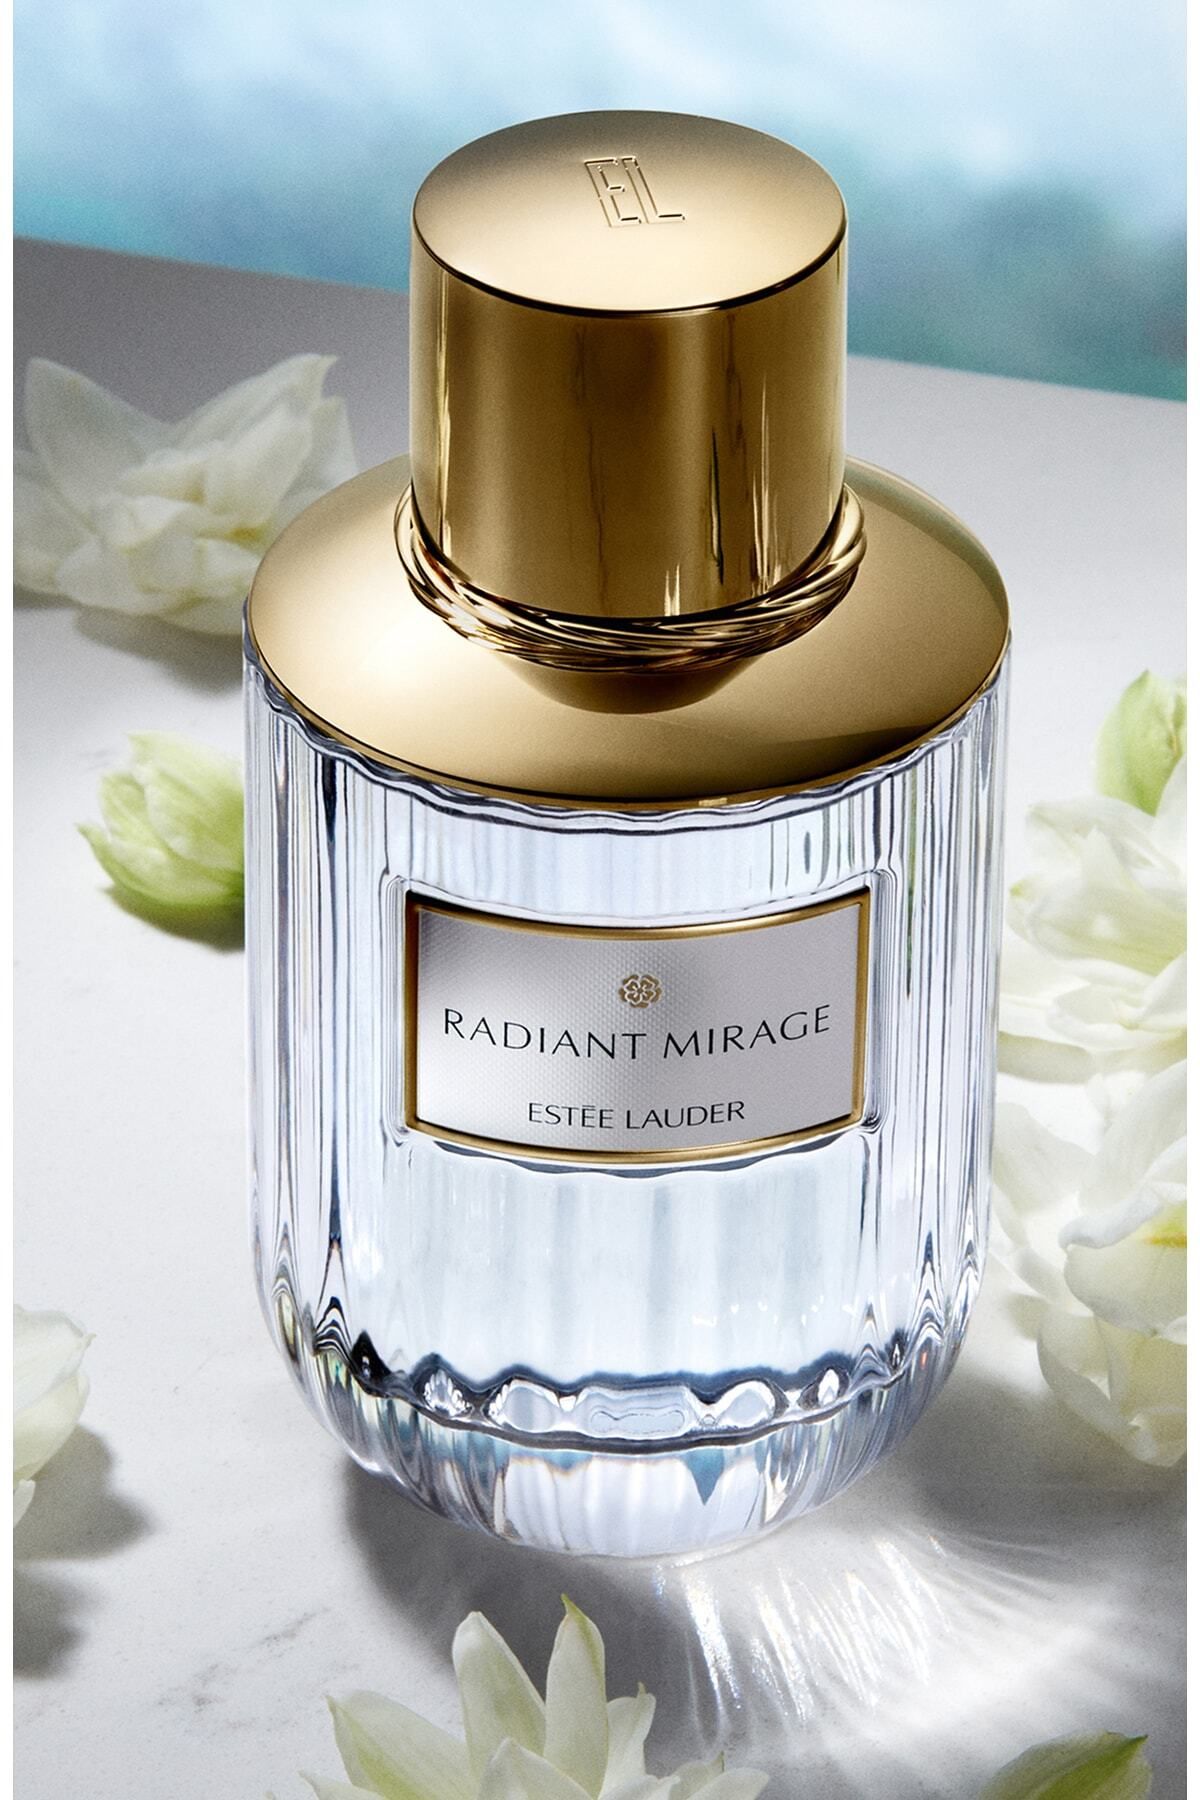 Estee Lauder Radiant Mirage - ادوپرفیوم 100 Ml عطر زنانه مجموعه عطرهای لوکس …parfüm65